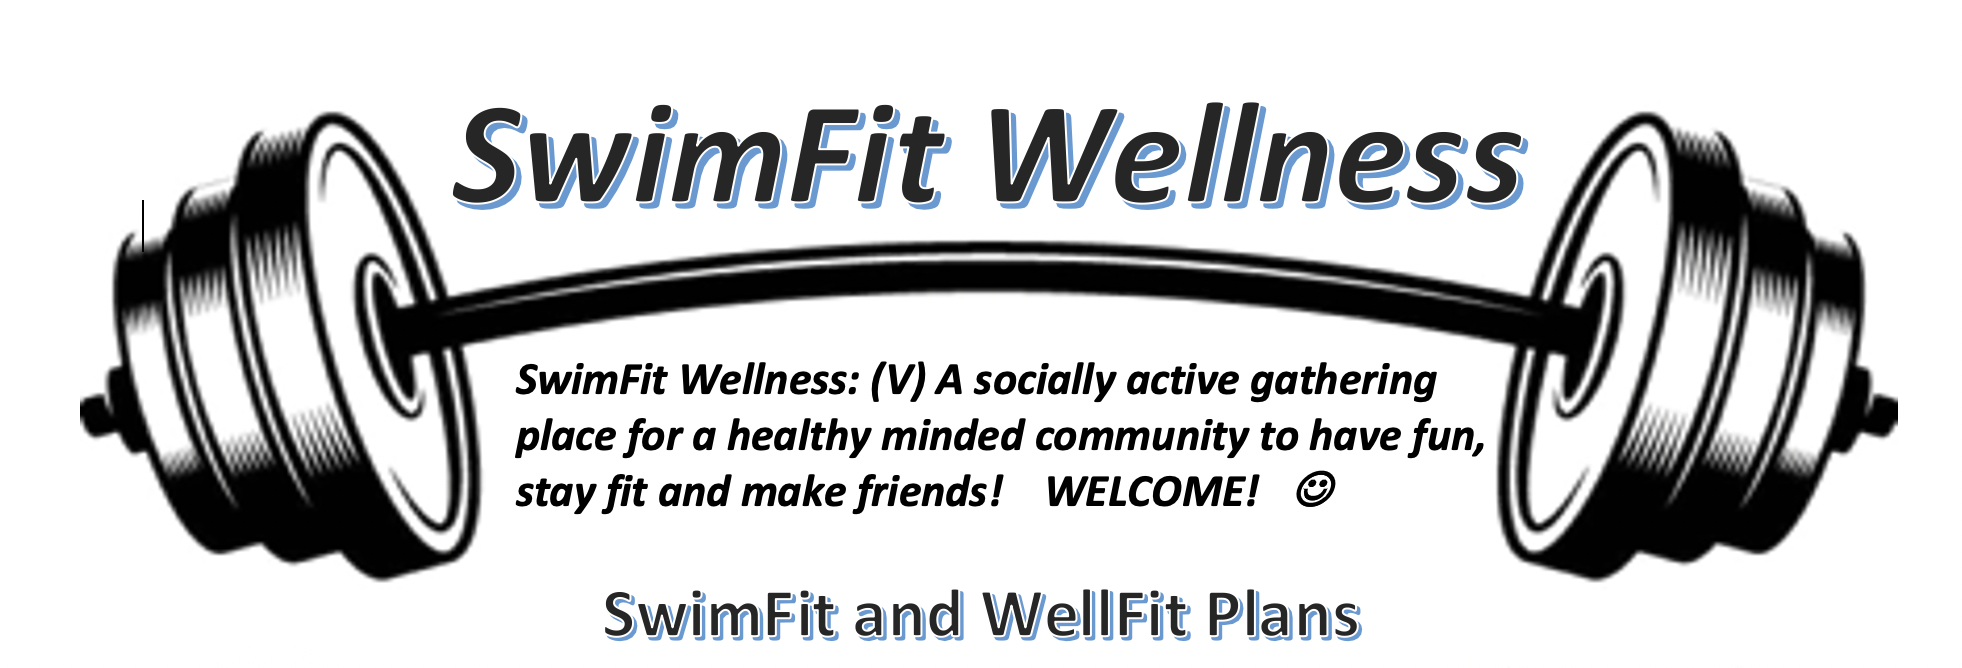 SwimFit Wellness 